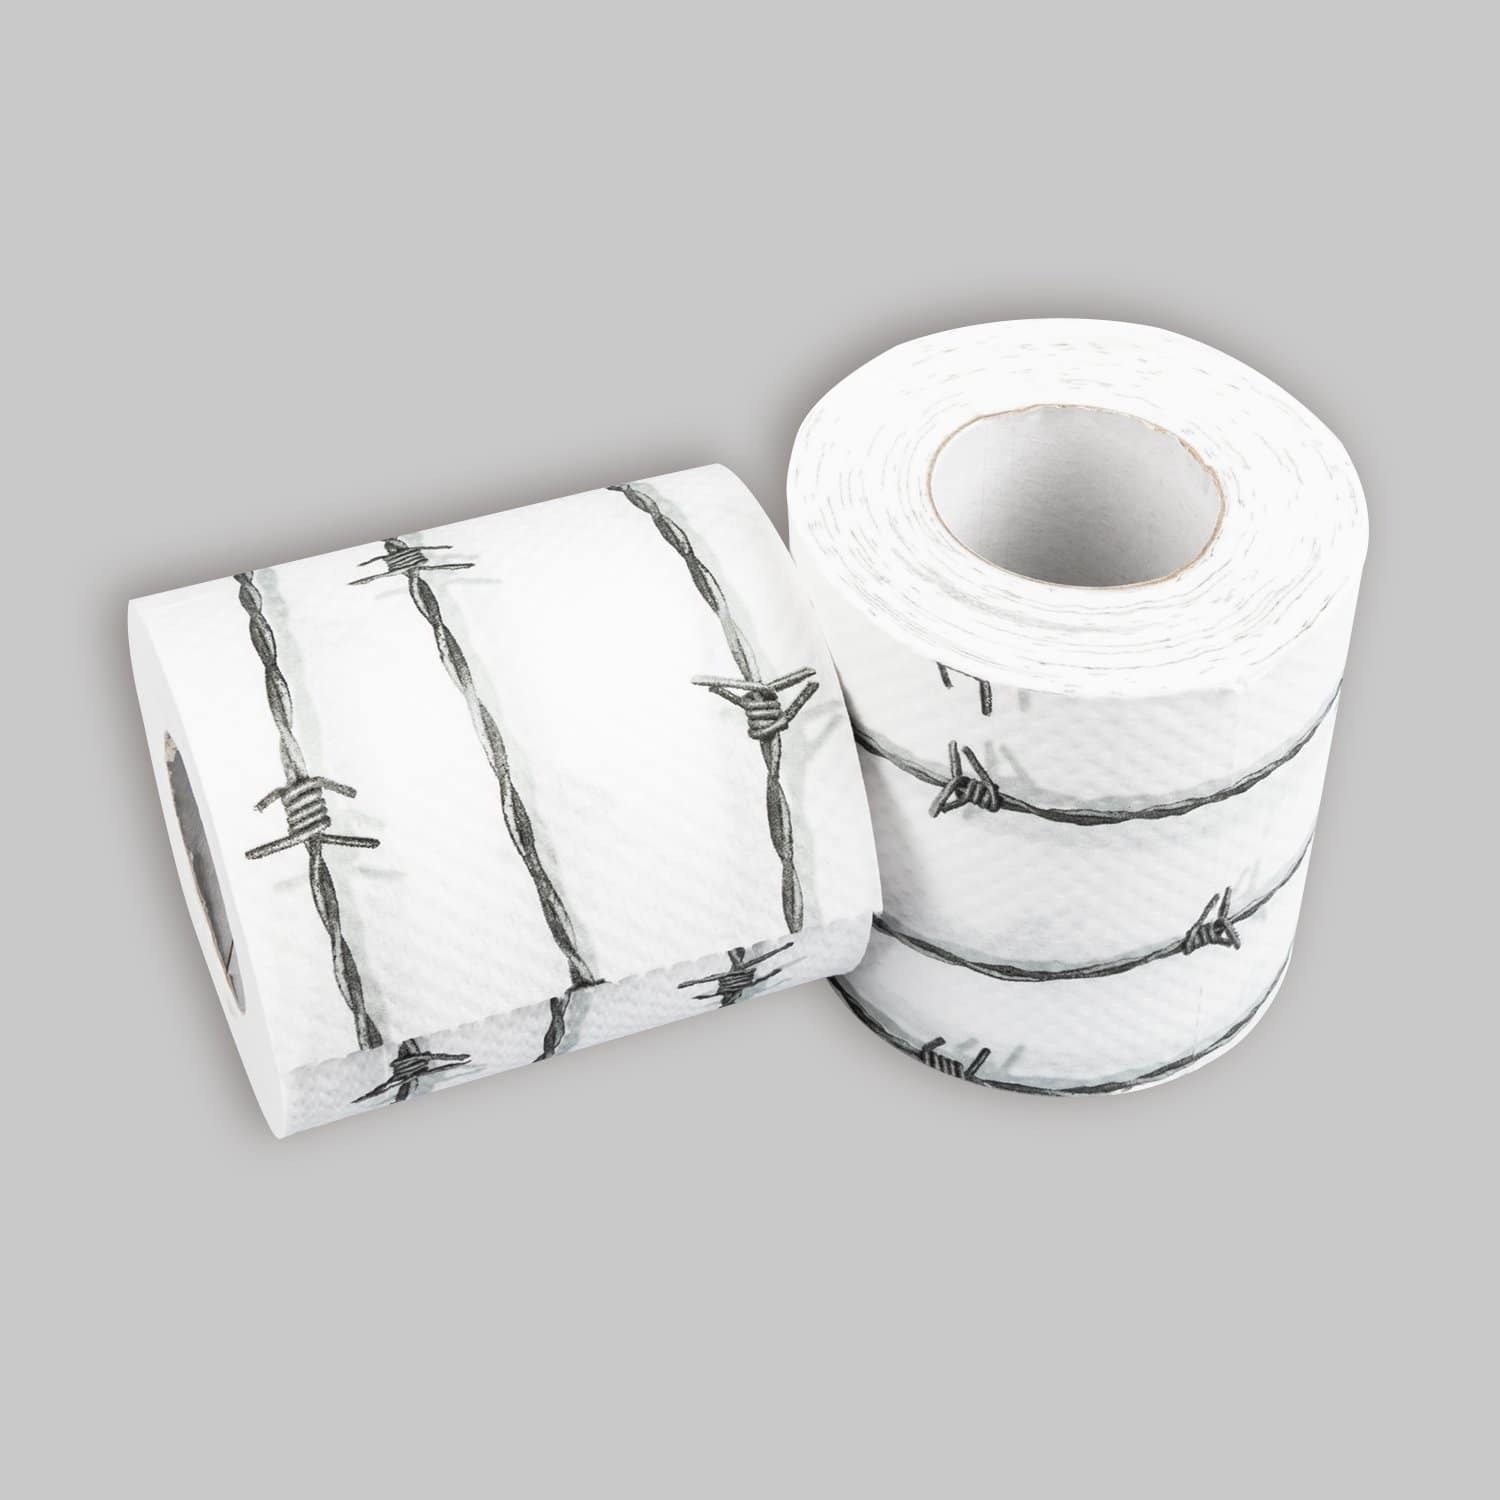 Toilettenpapier - Stacheldraht